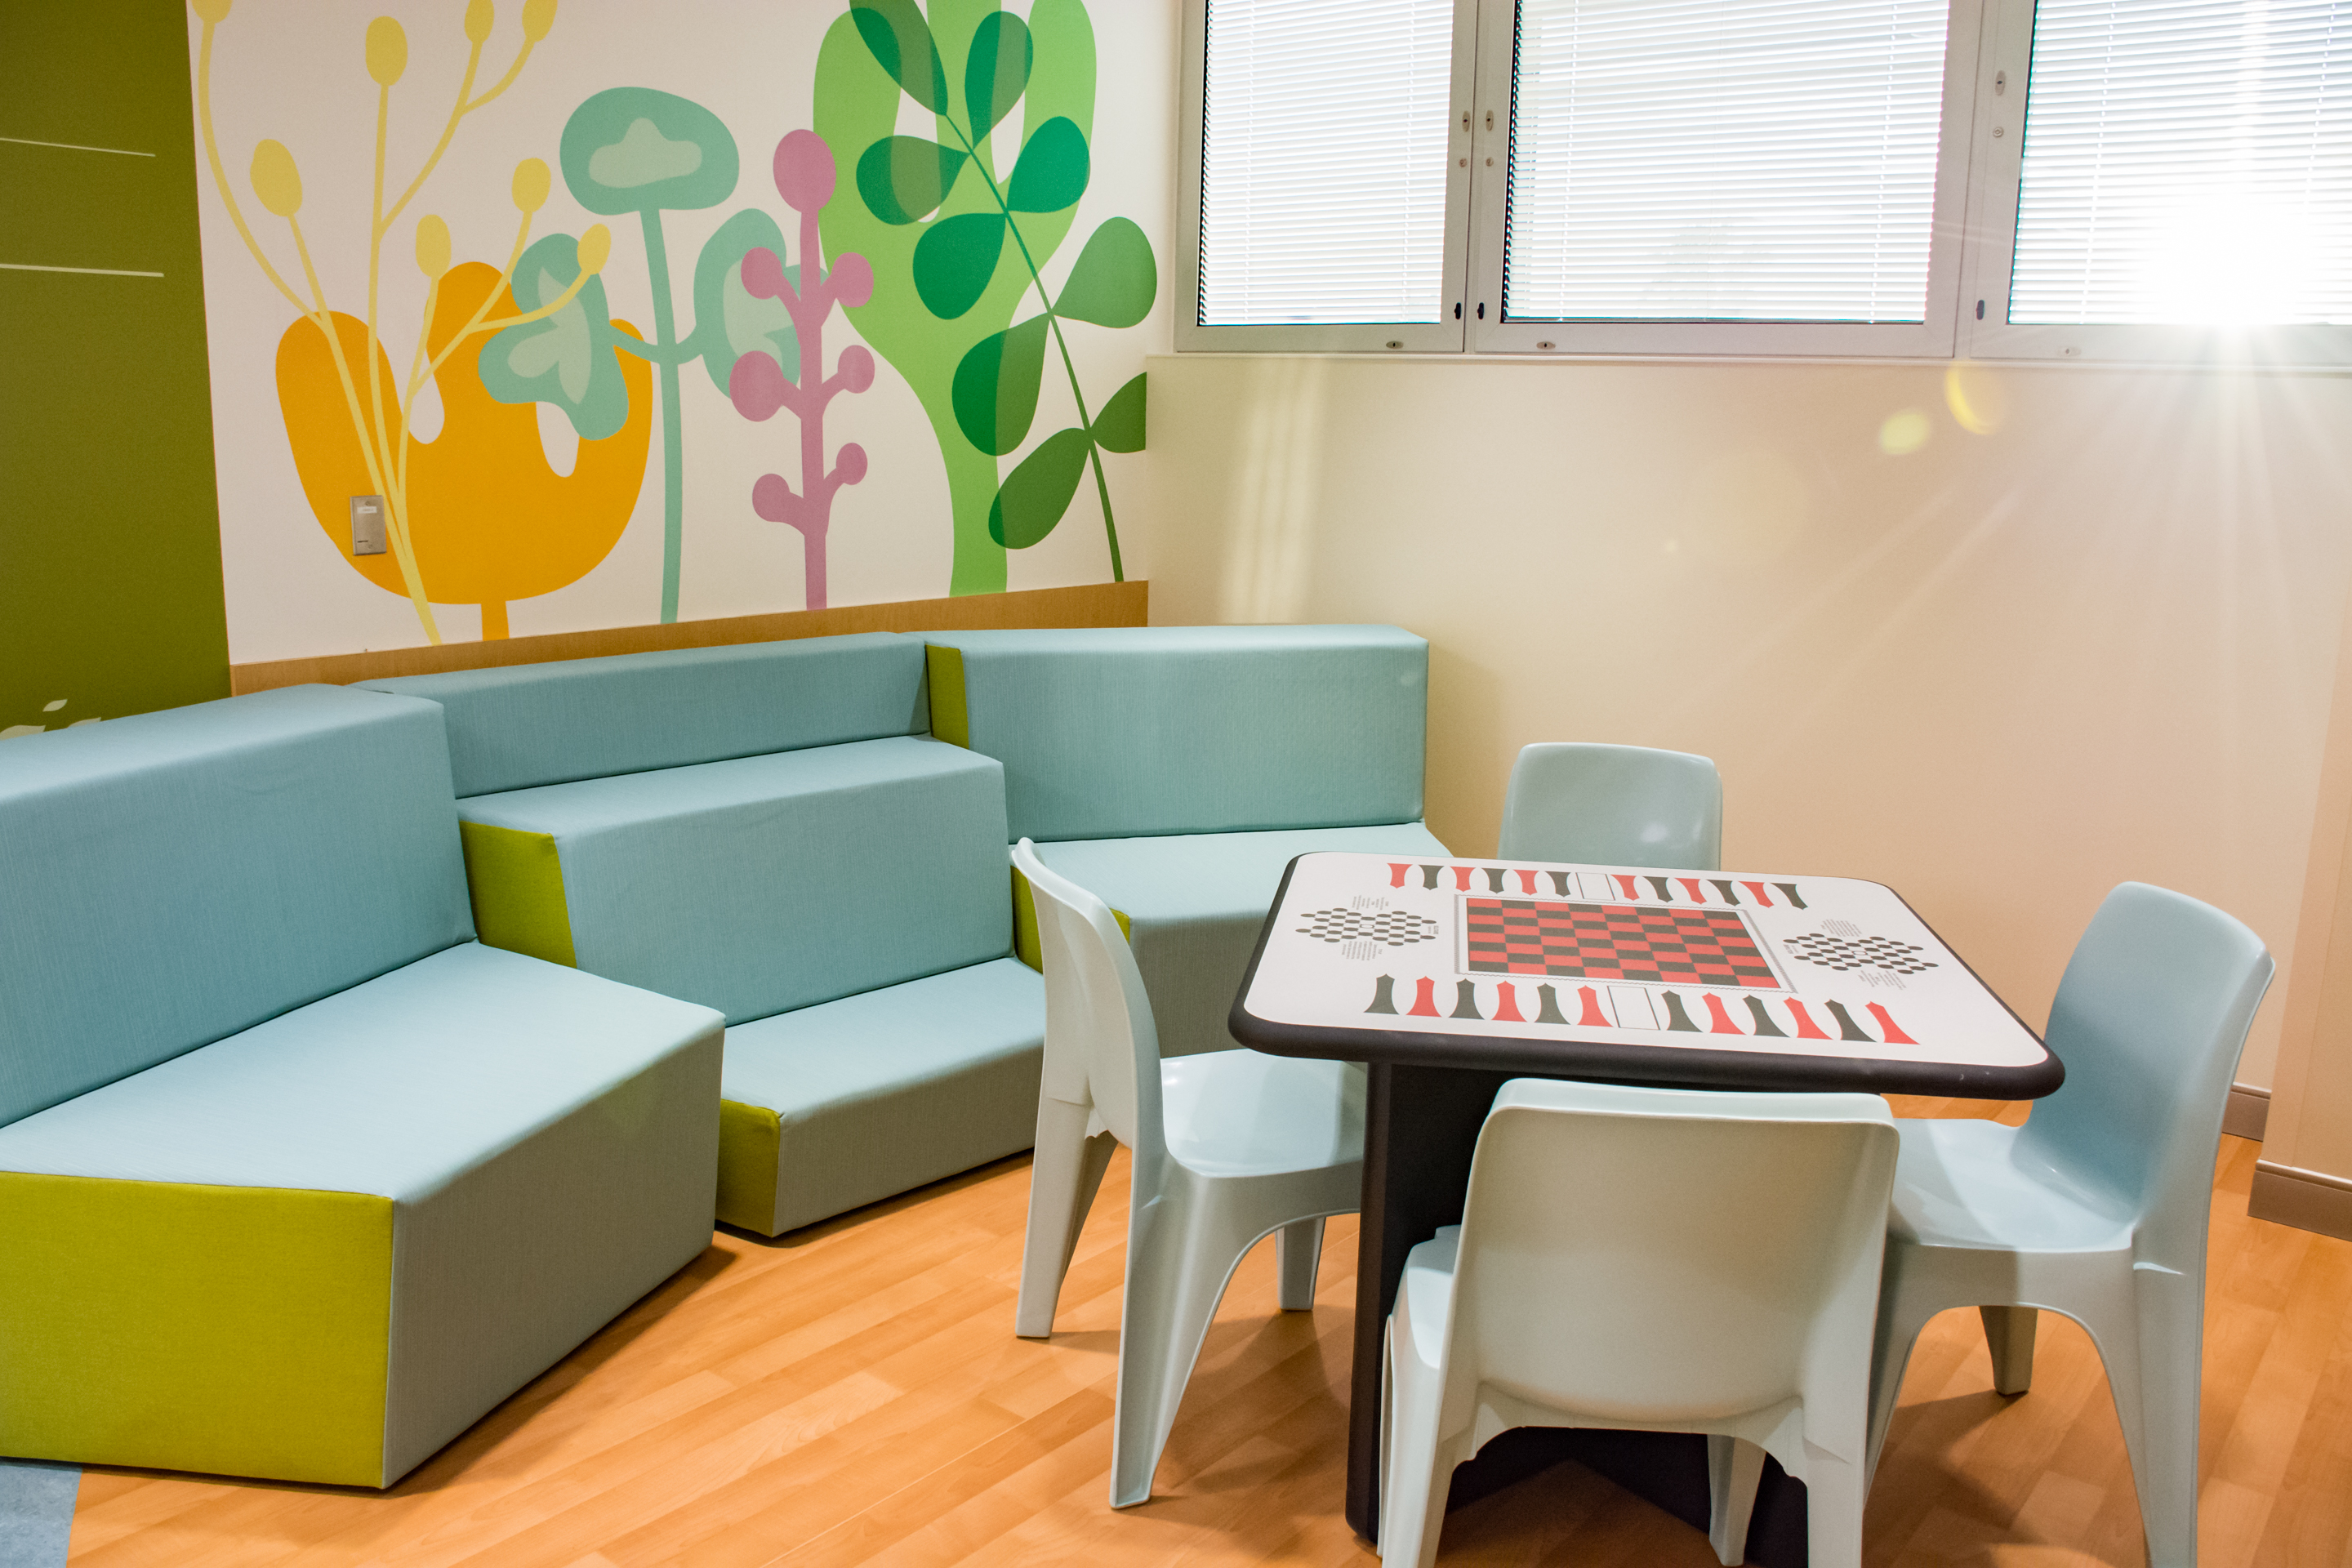 CHOC Mental Health Inpatient Center_activity room